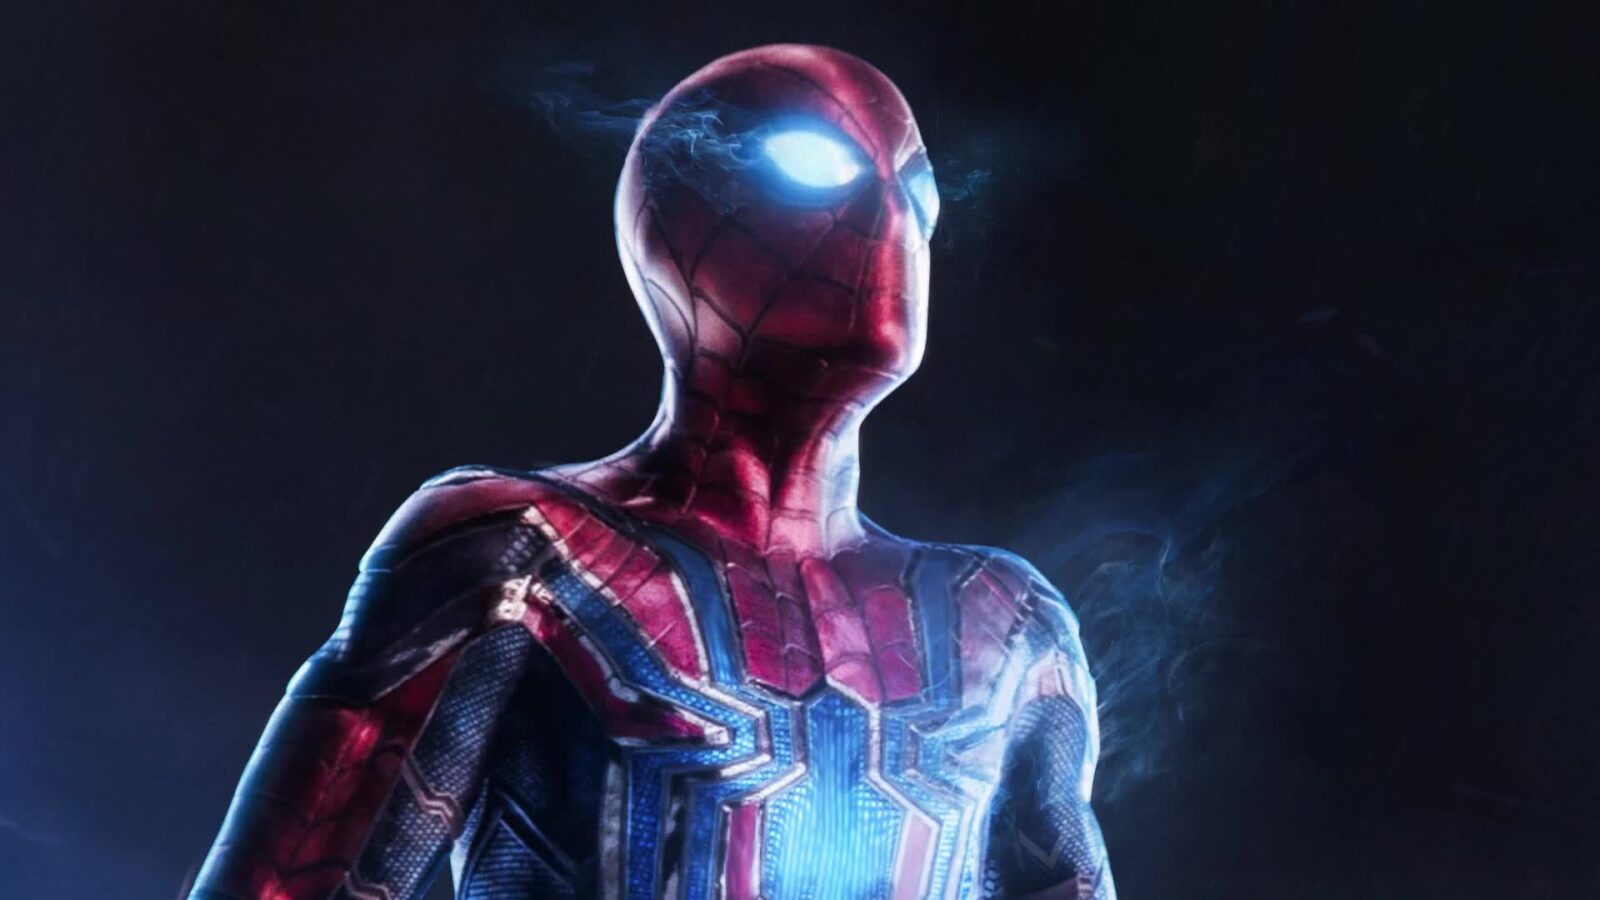 Live Desktop Wallpapers | Spider Man Avengers Infinity War Shining Eyes - Free Live Wallpaper